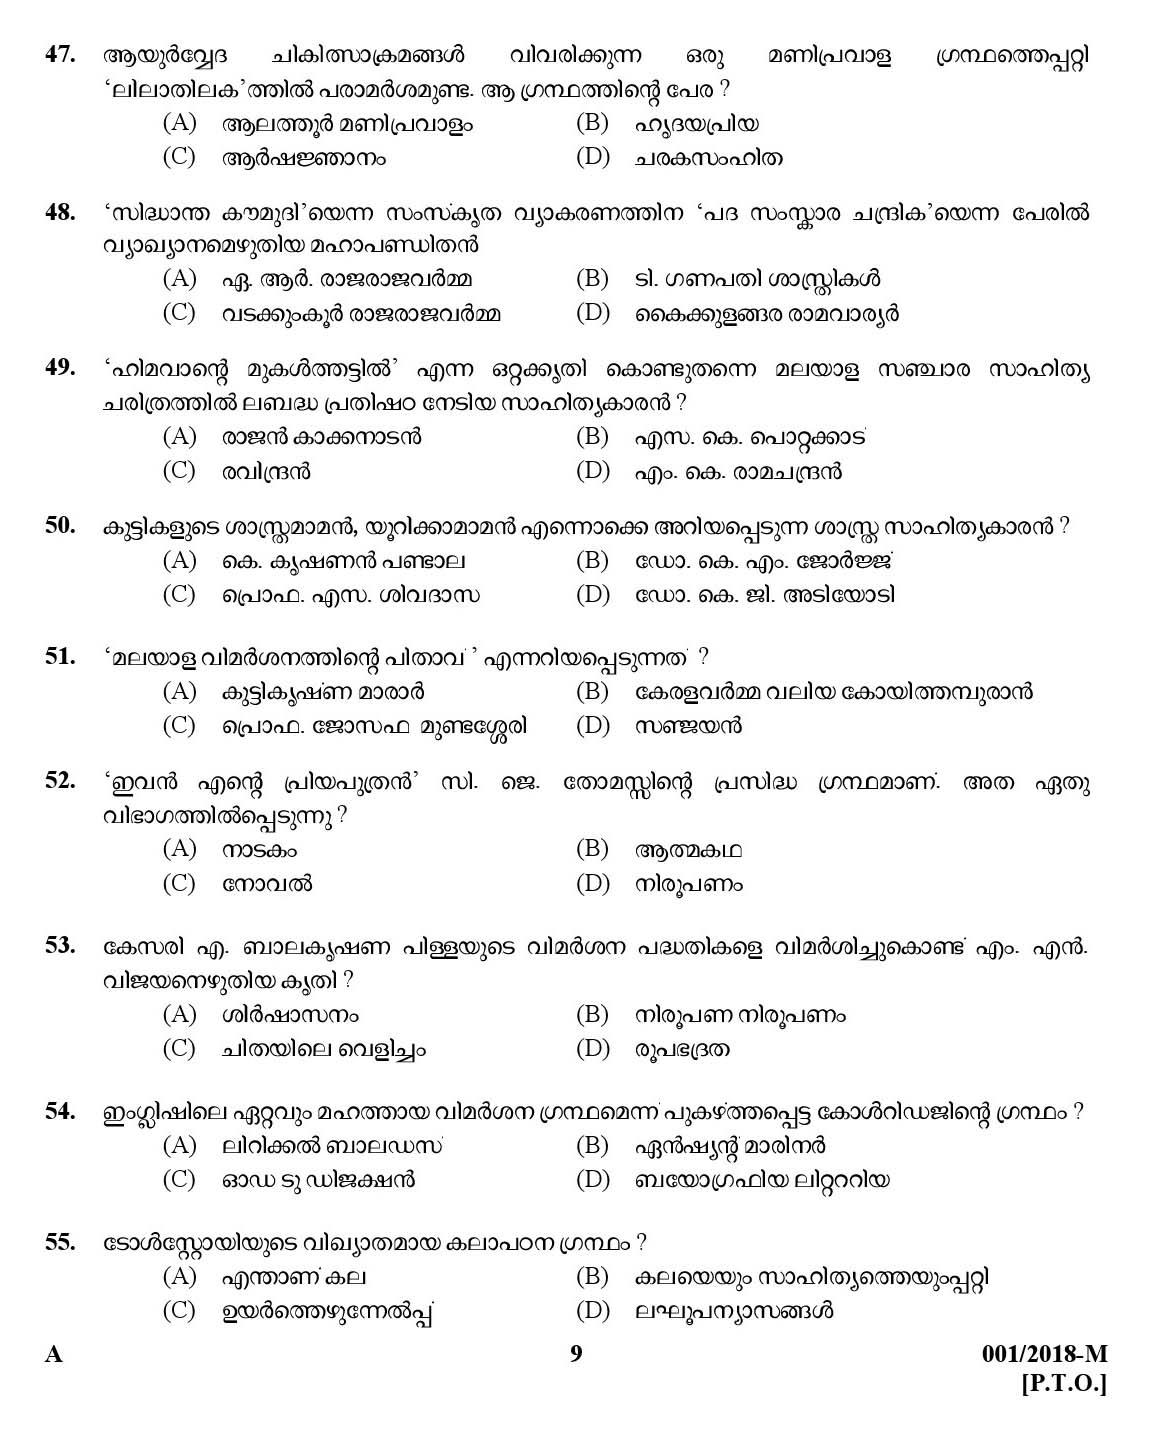 Kerala PSC High School Assistant Malayalam Question Code 0012018 M 8